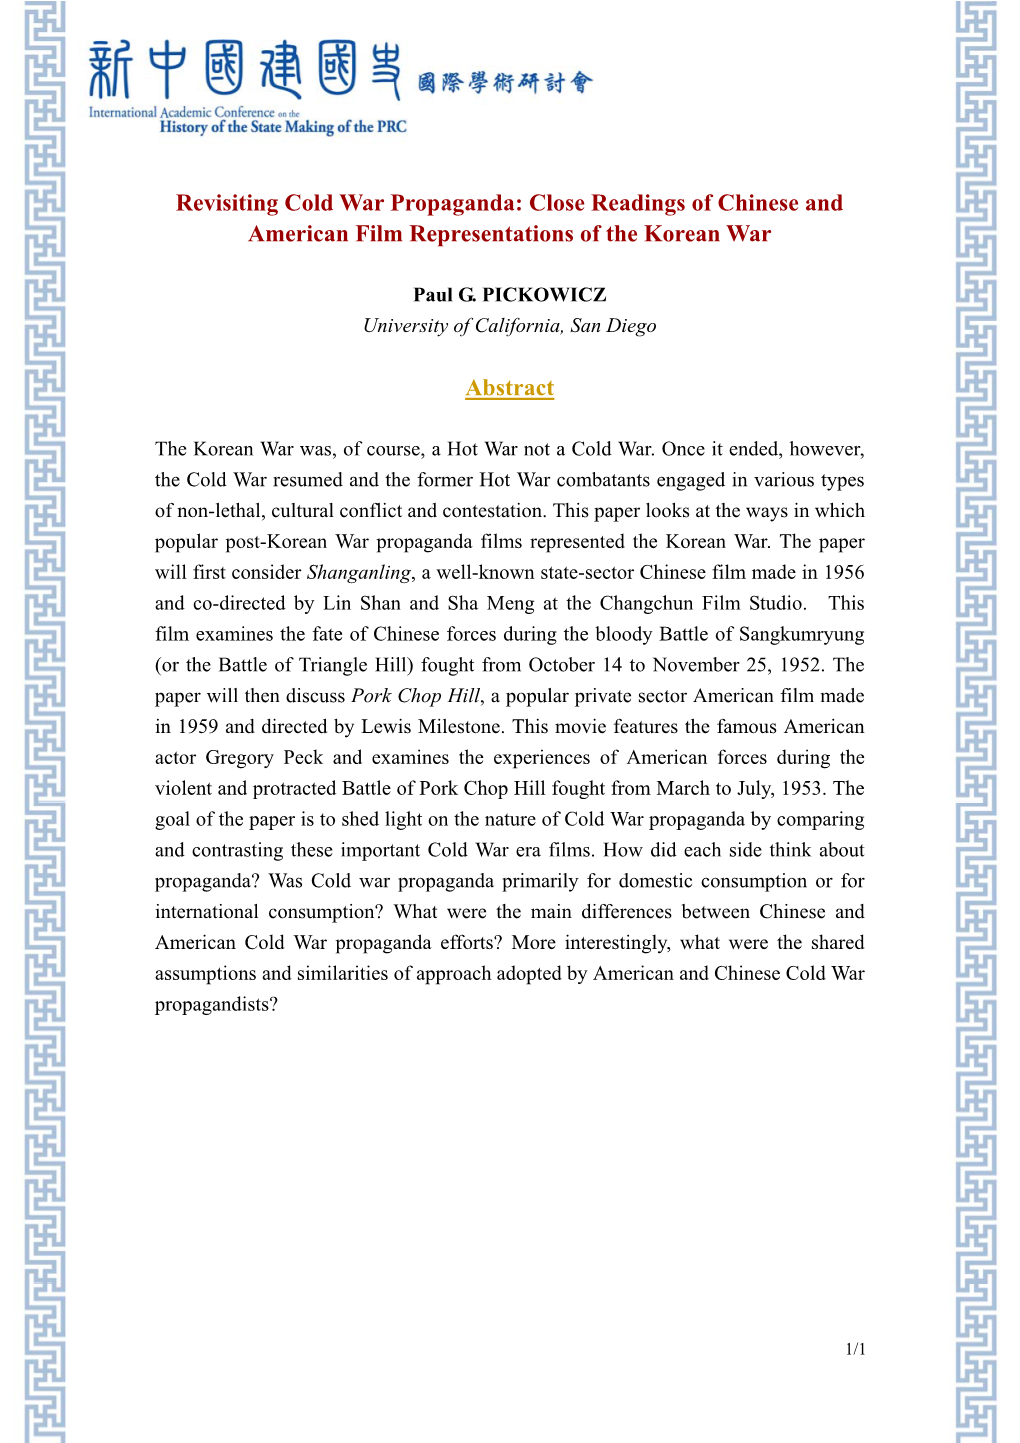 Revisiting Cold War Propaganda: Close Readings of Chinese and American Film Representations of the Korean War